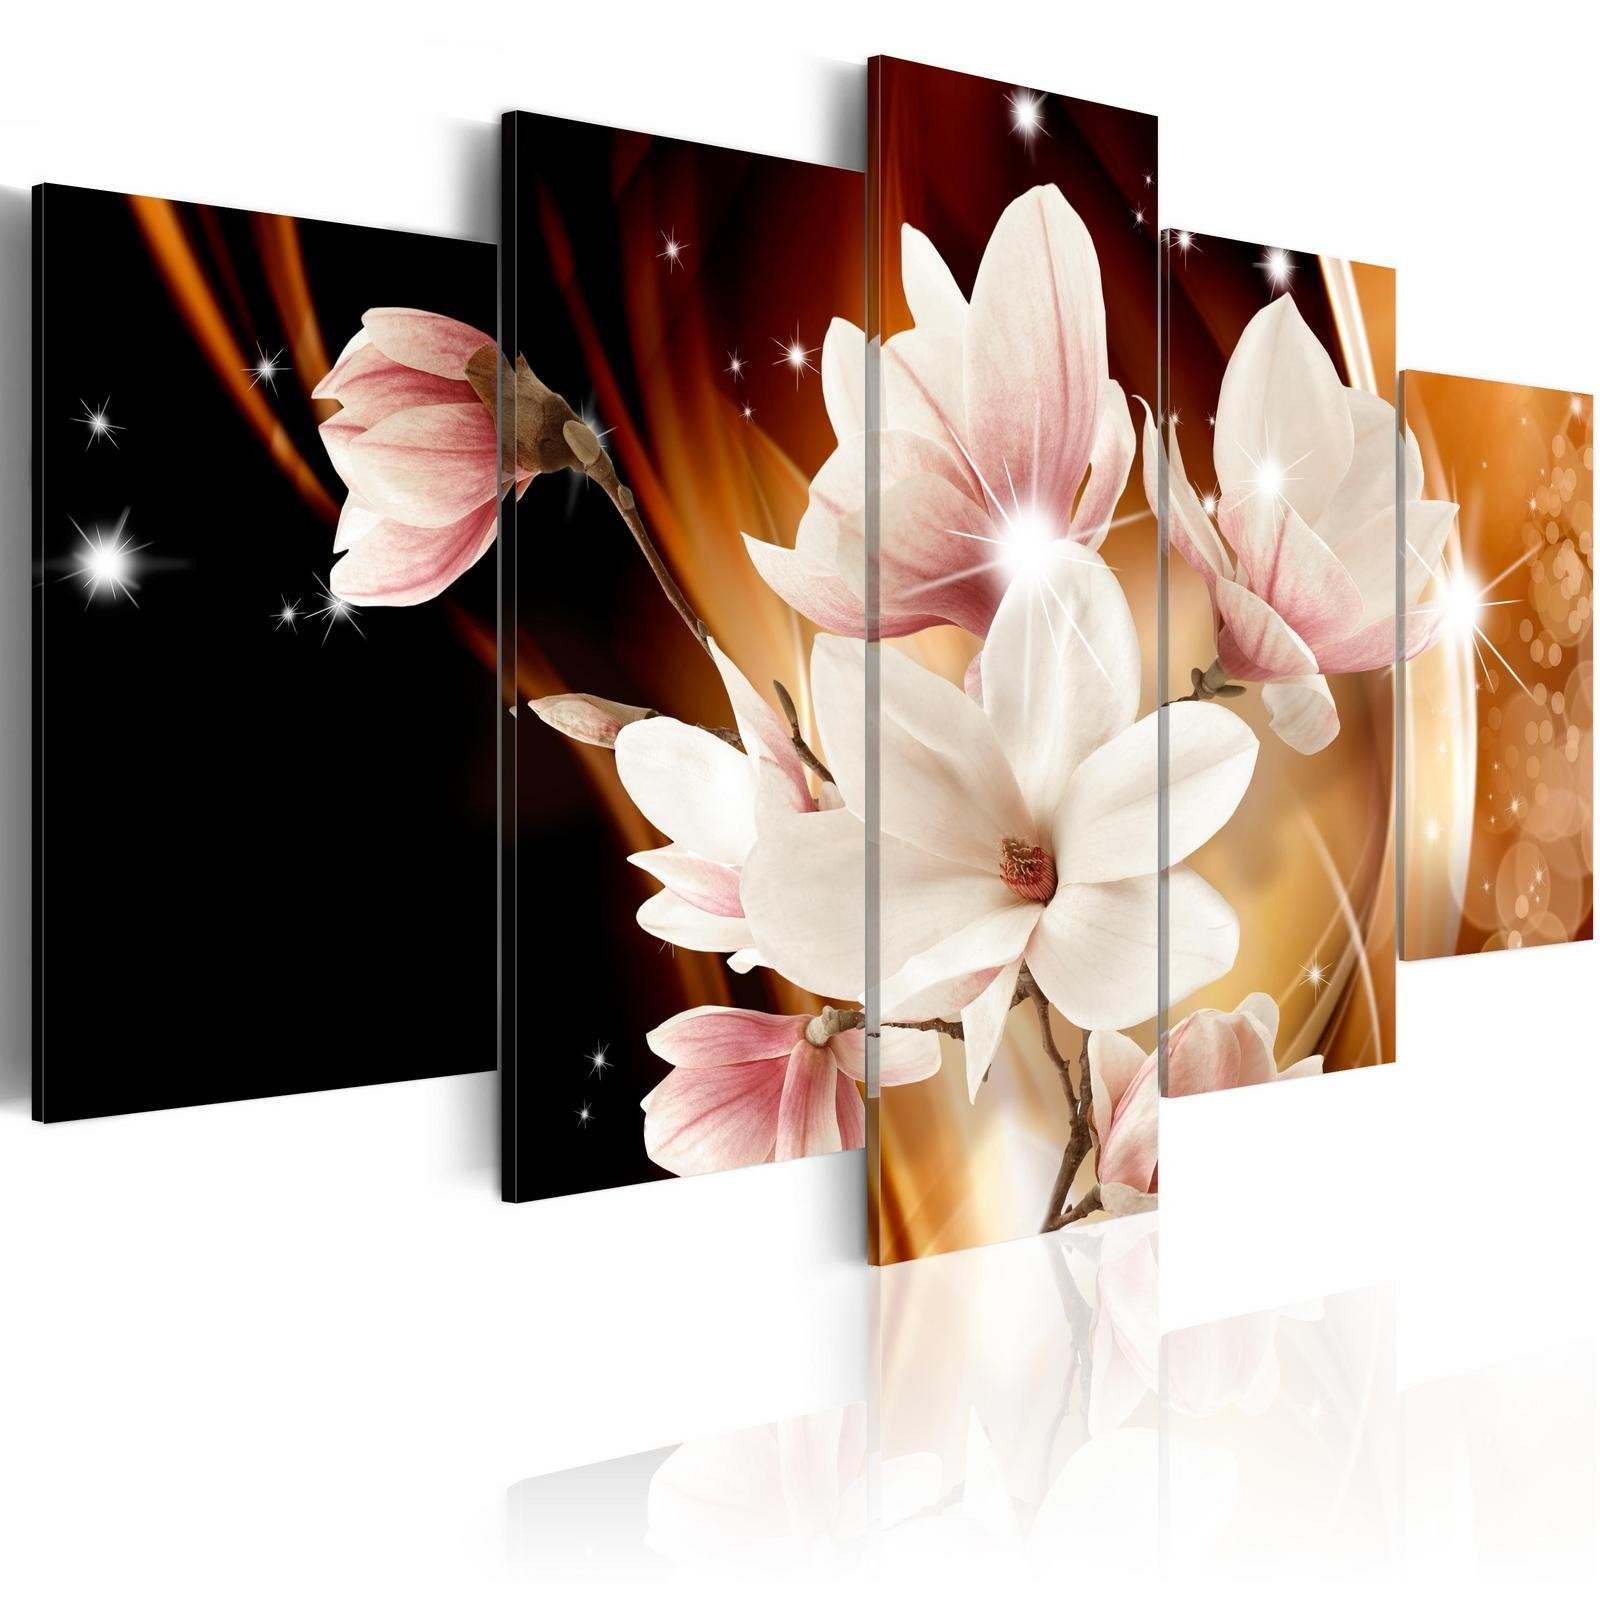 Tiptophomedecor Stretched Canvas Floral Art - Illumination (Magnolia) - Stretche - $89.99 - $139.99